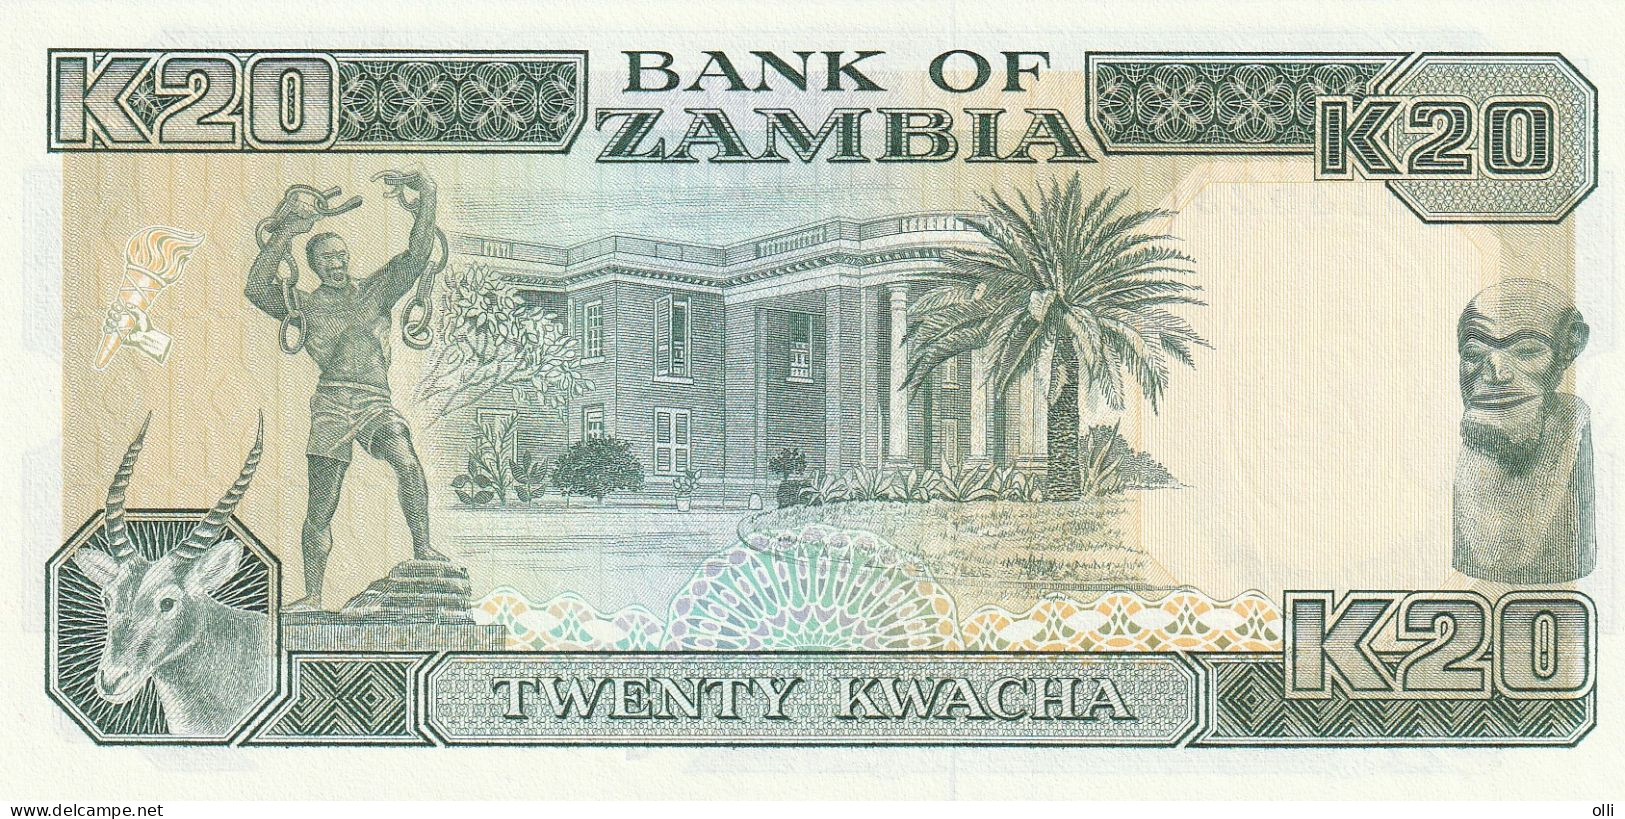 ZAMBIA  20 Kwacha   ND/1989 P-32   UNC - Sambia